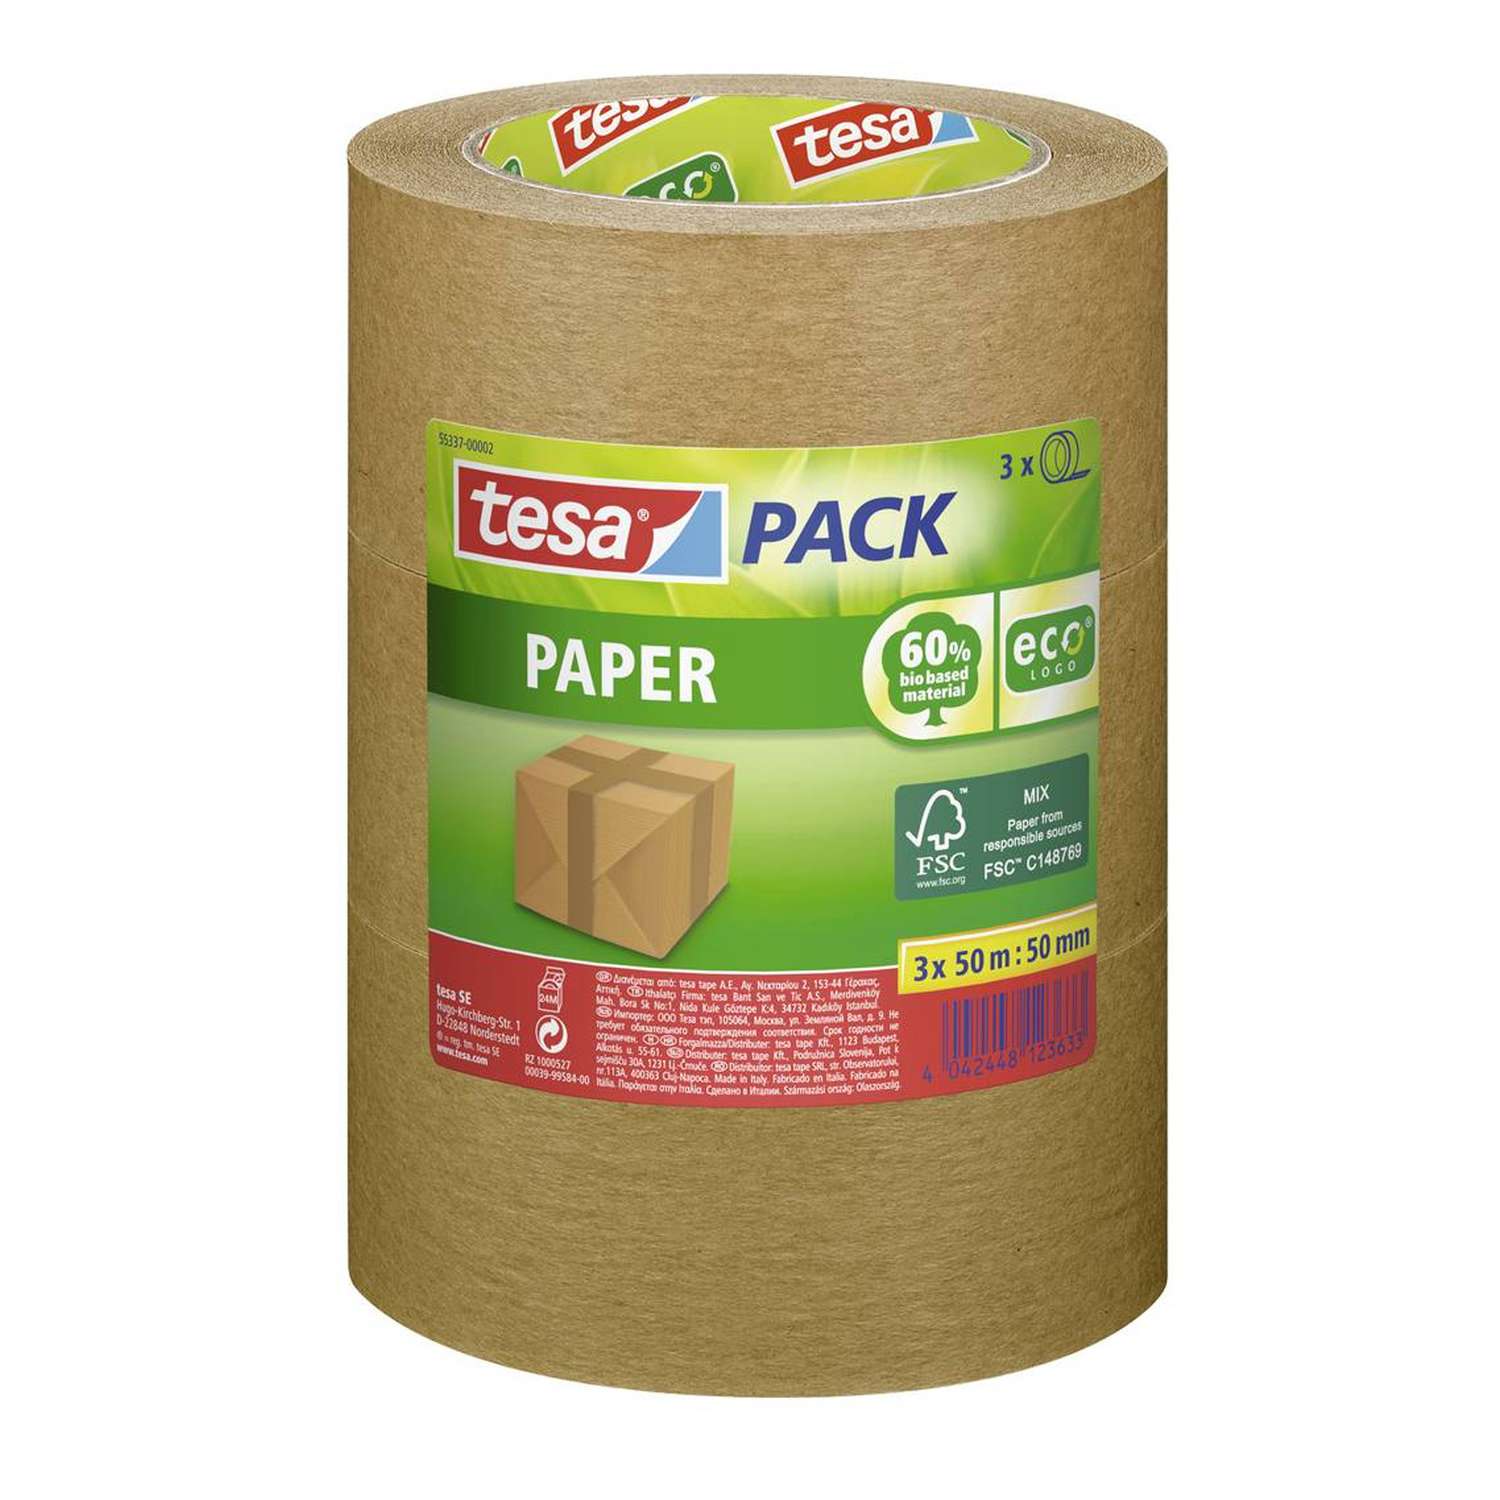 Klacht knijpen Gewoon doen Tesa Pack Paper breed plakband